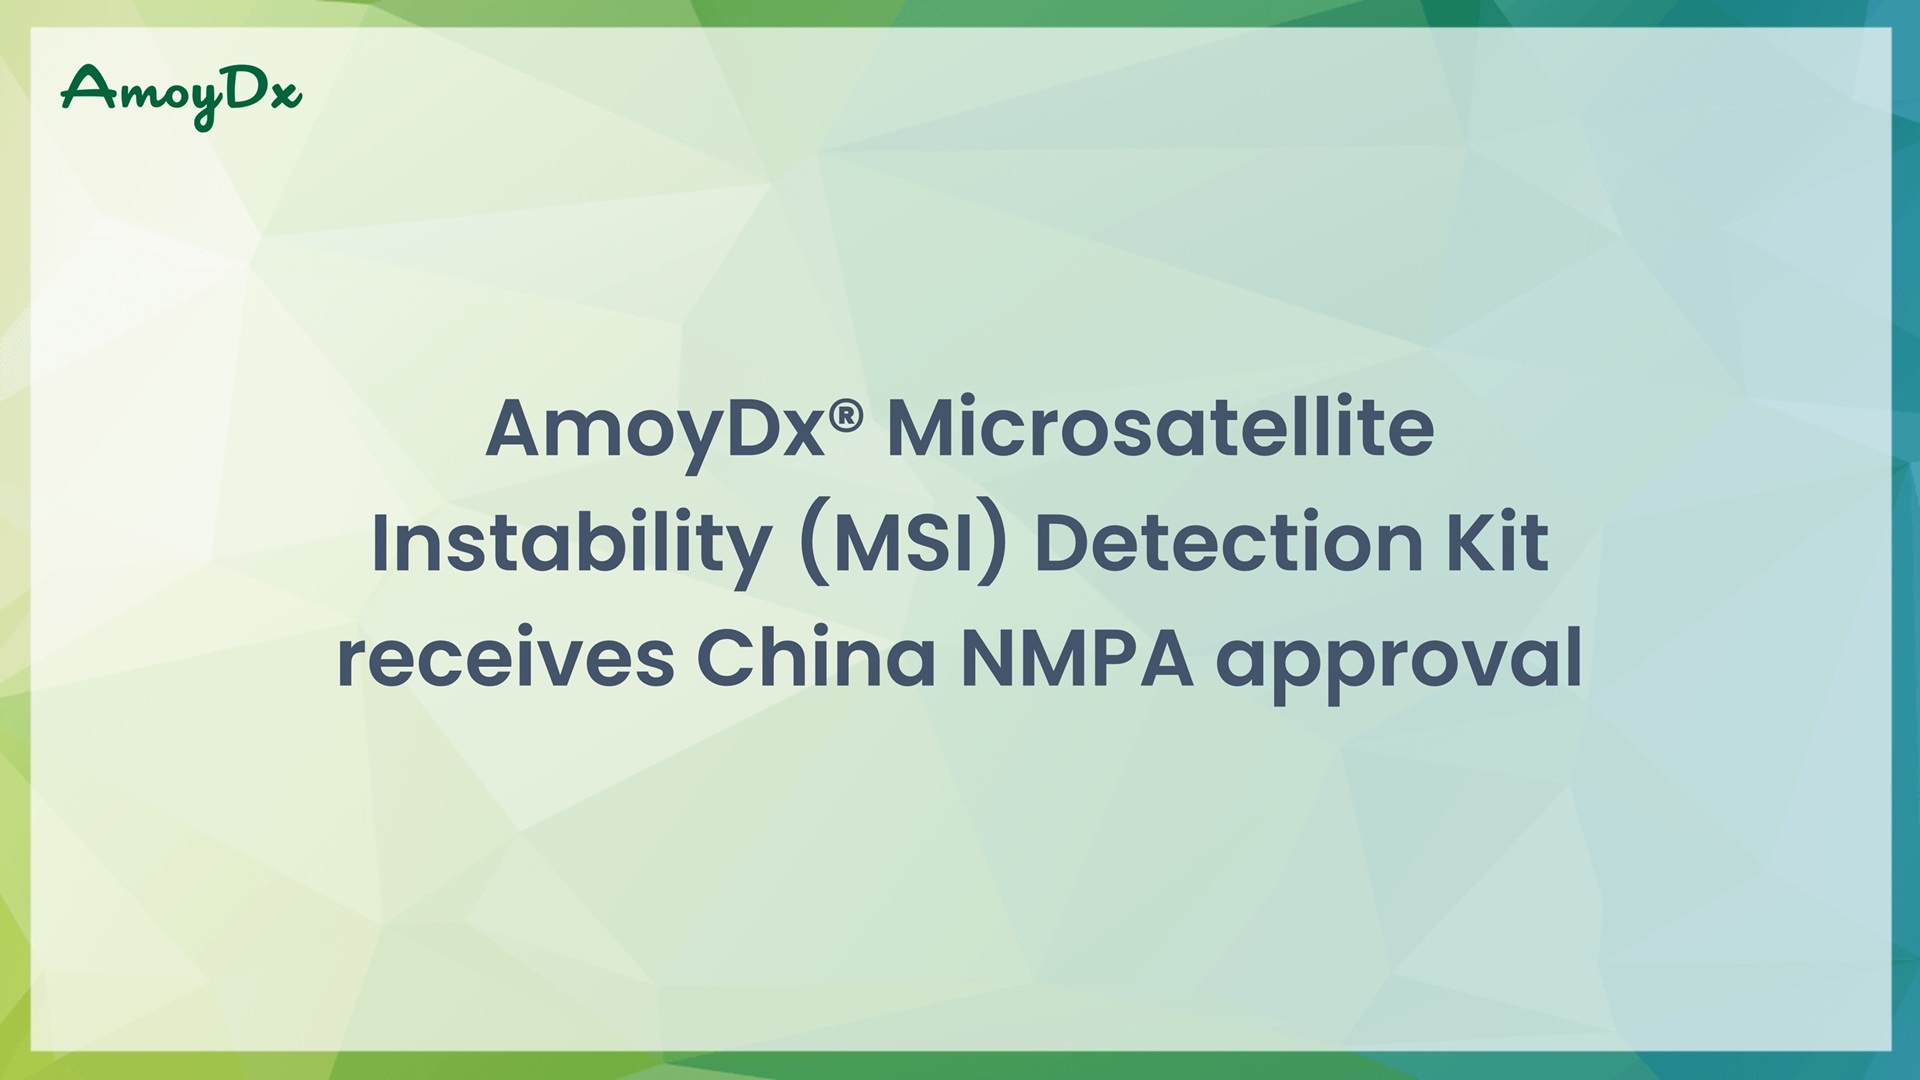 AmoyDx® Microsatellite Instability (MSI) Detection Kit Received NMPA Approval for Pan-Tumor Immunotherapy Companion Diagnostics